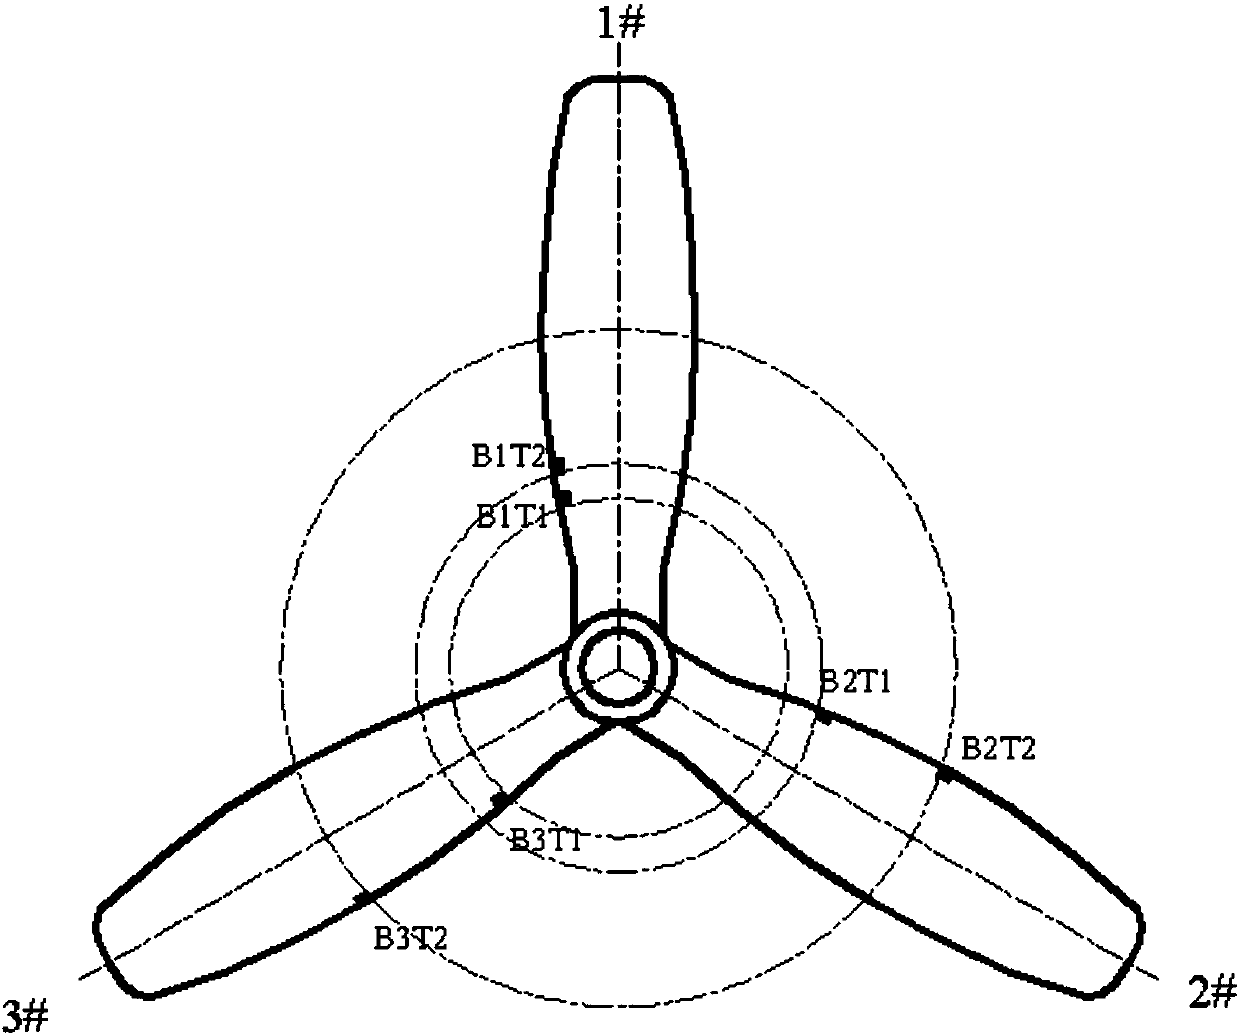 Pusher-type aero-propeller anti-icing function verification flight test method